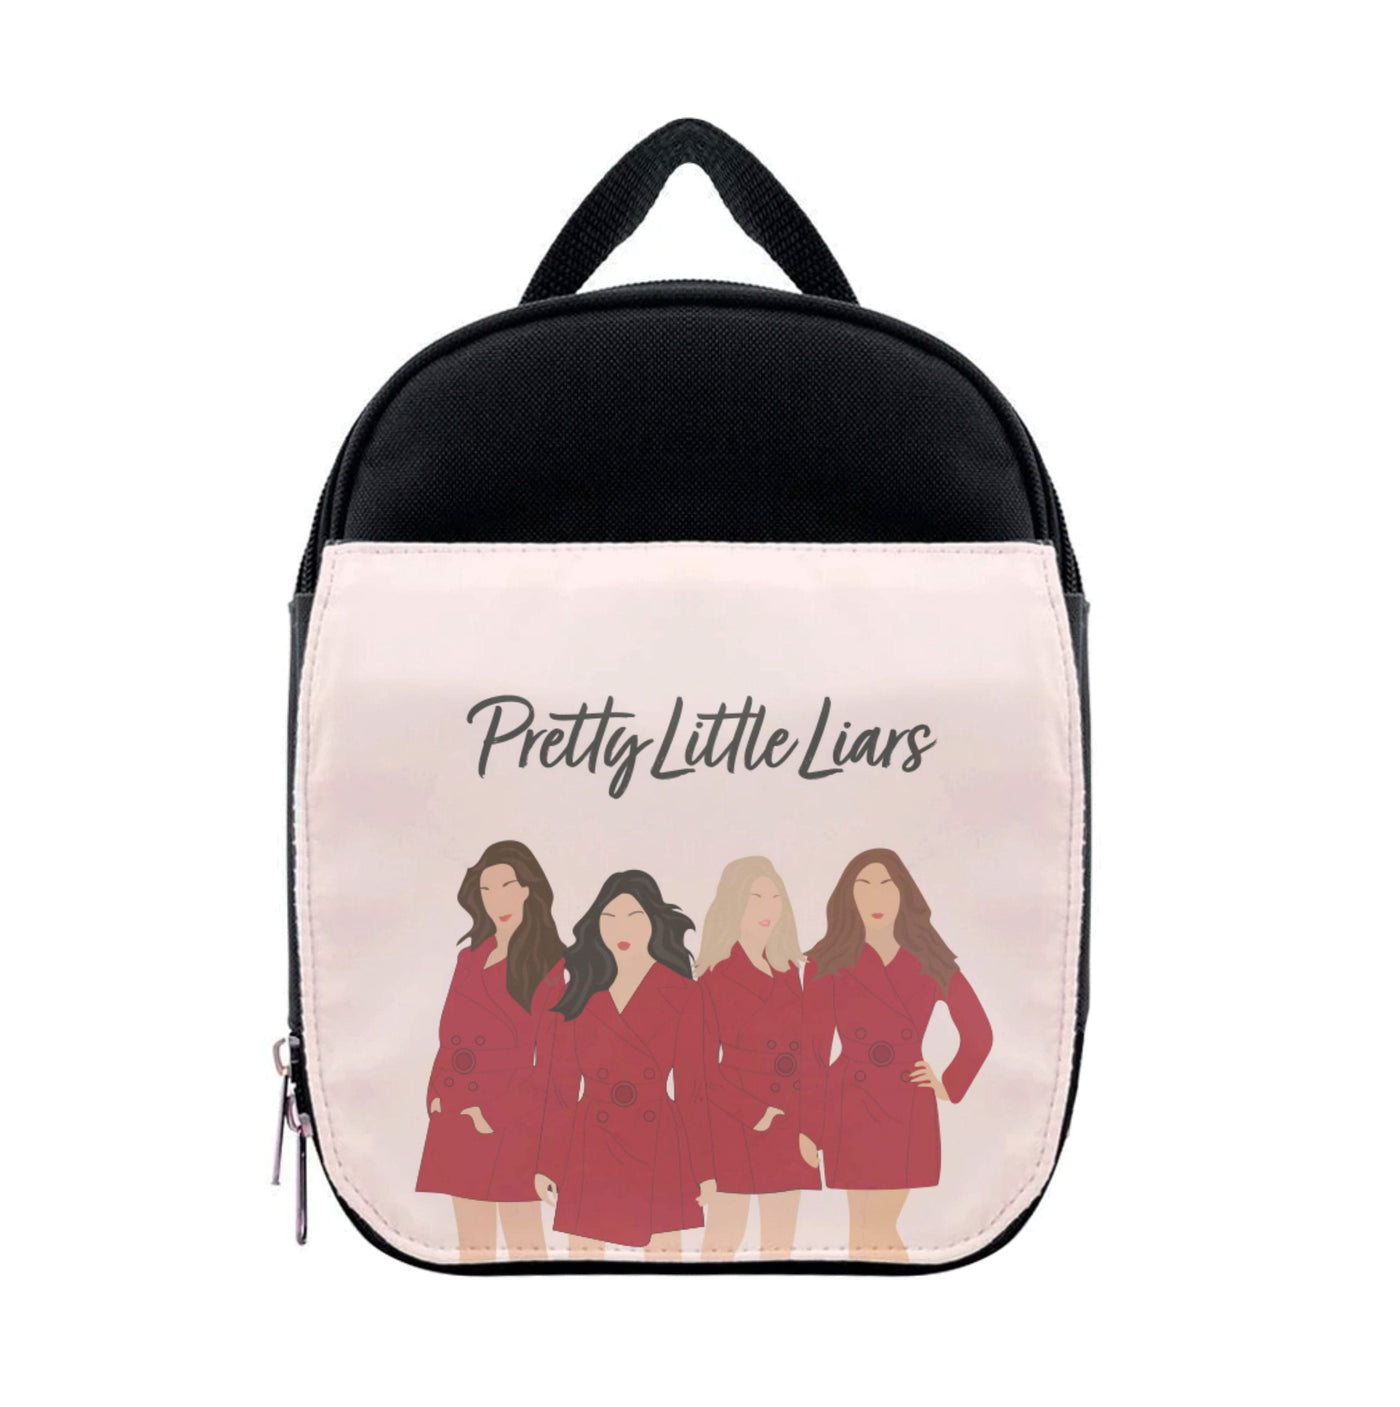 Girls - Pretty Little Liars Lunchbox